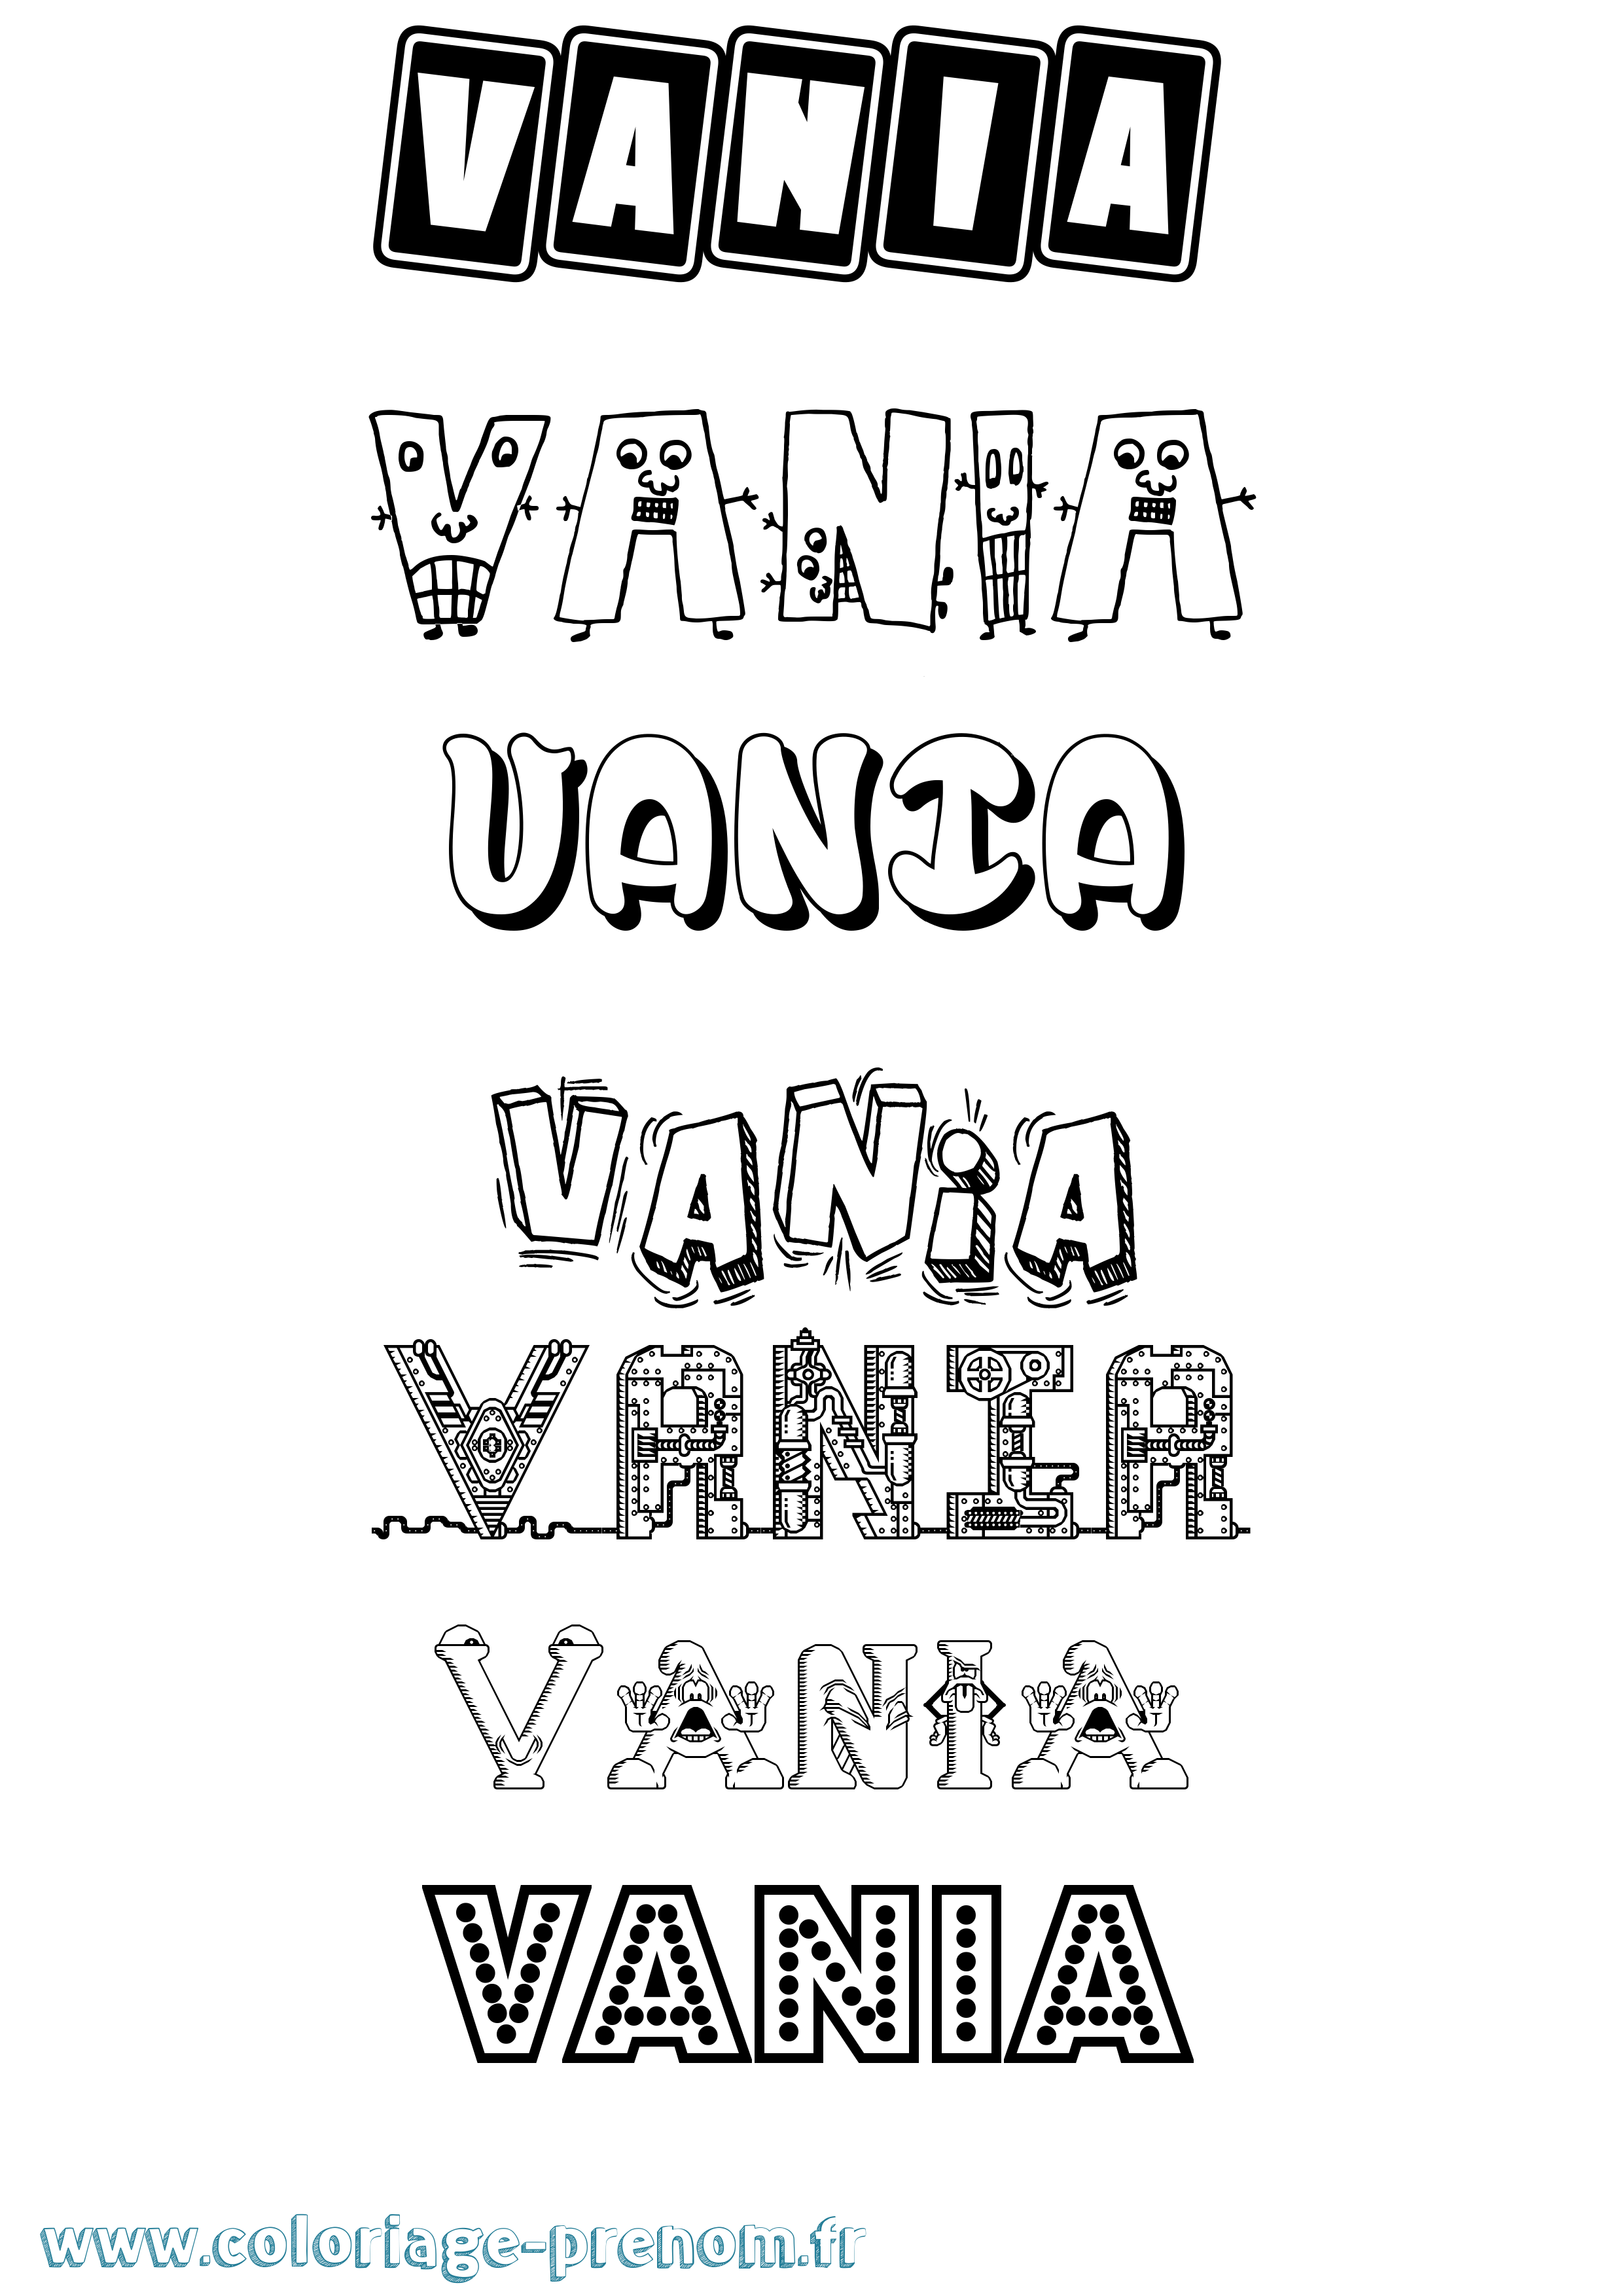 Coloriage prénom Vania Fun